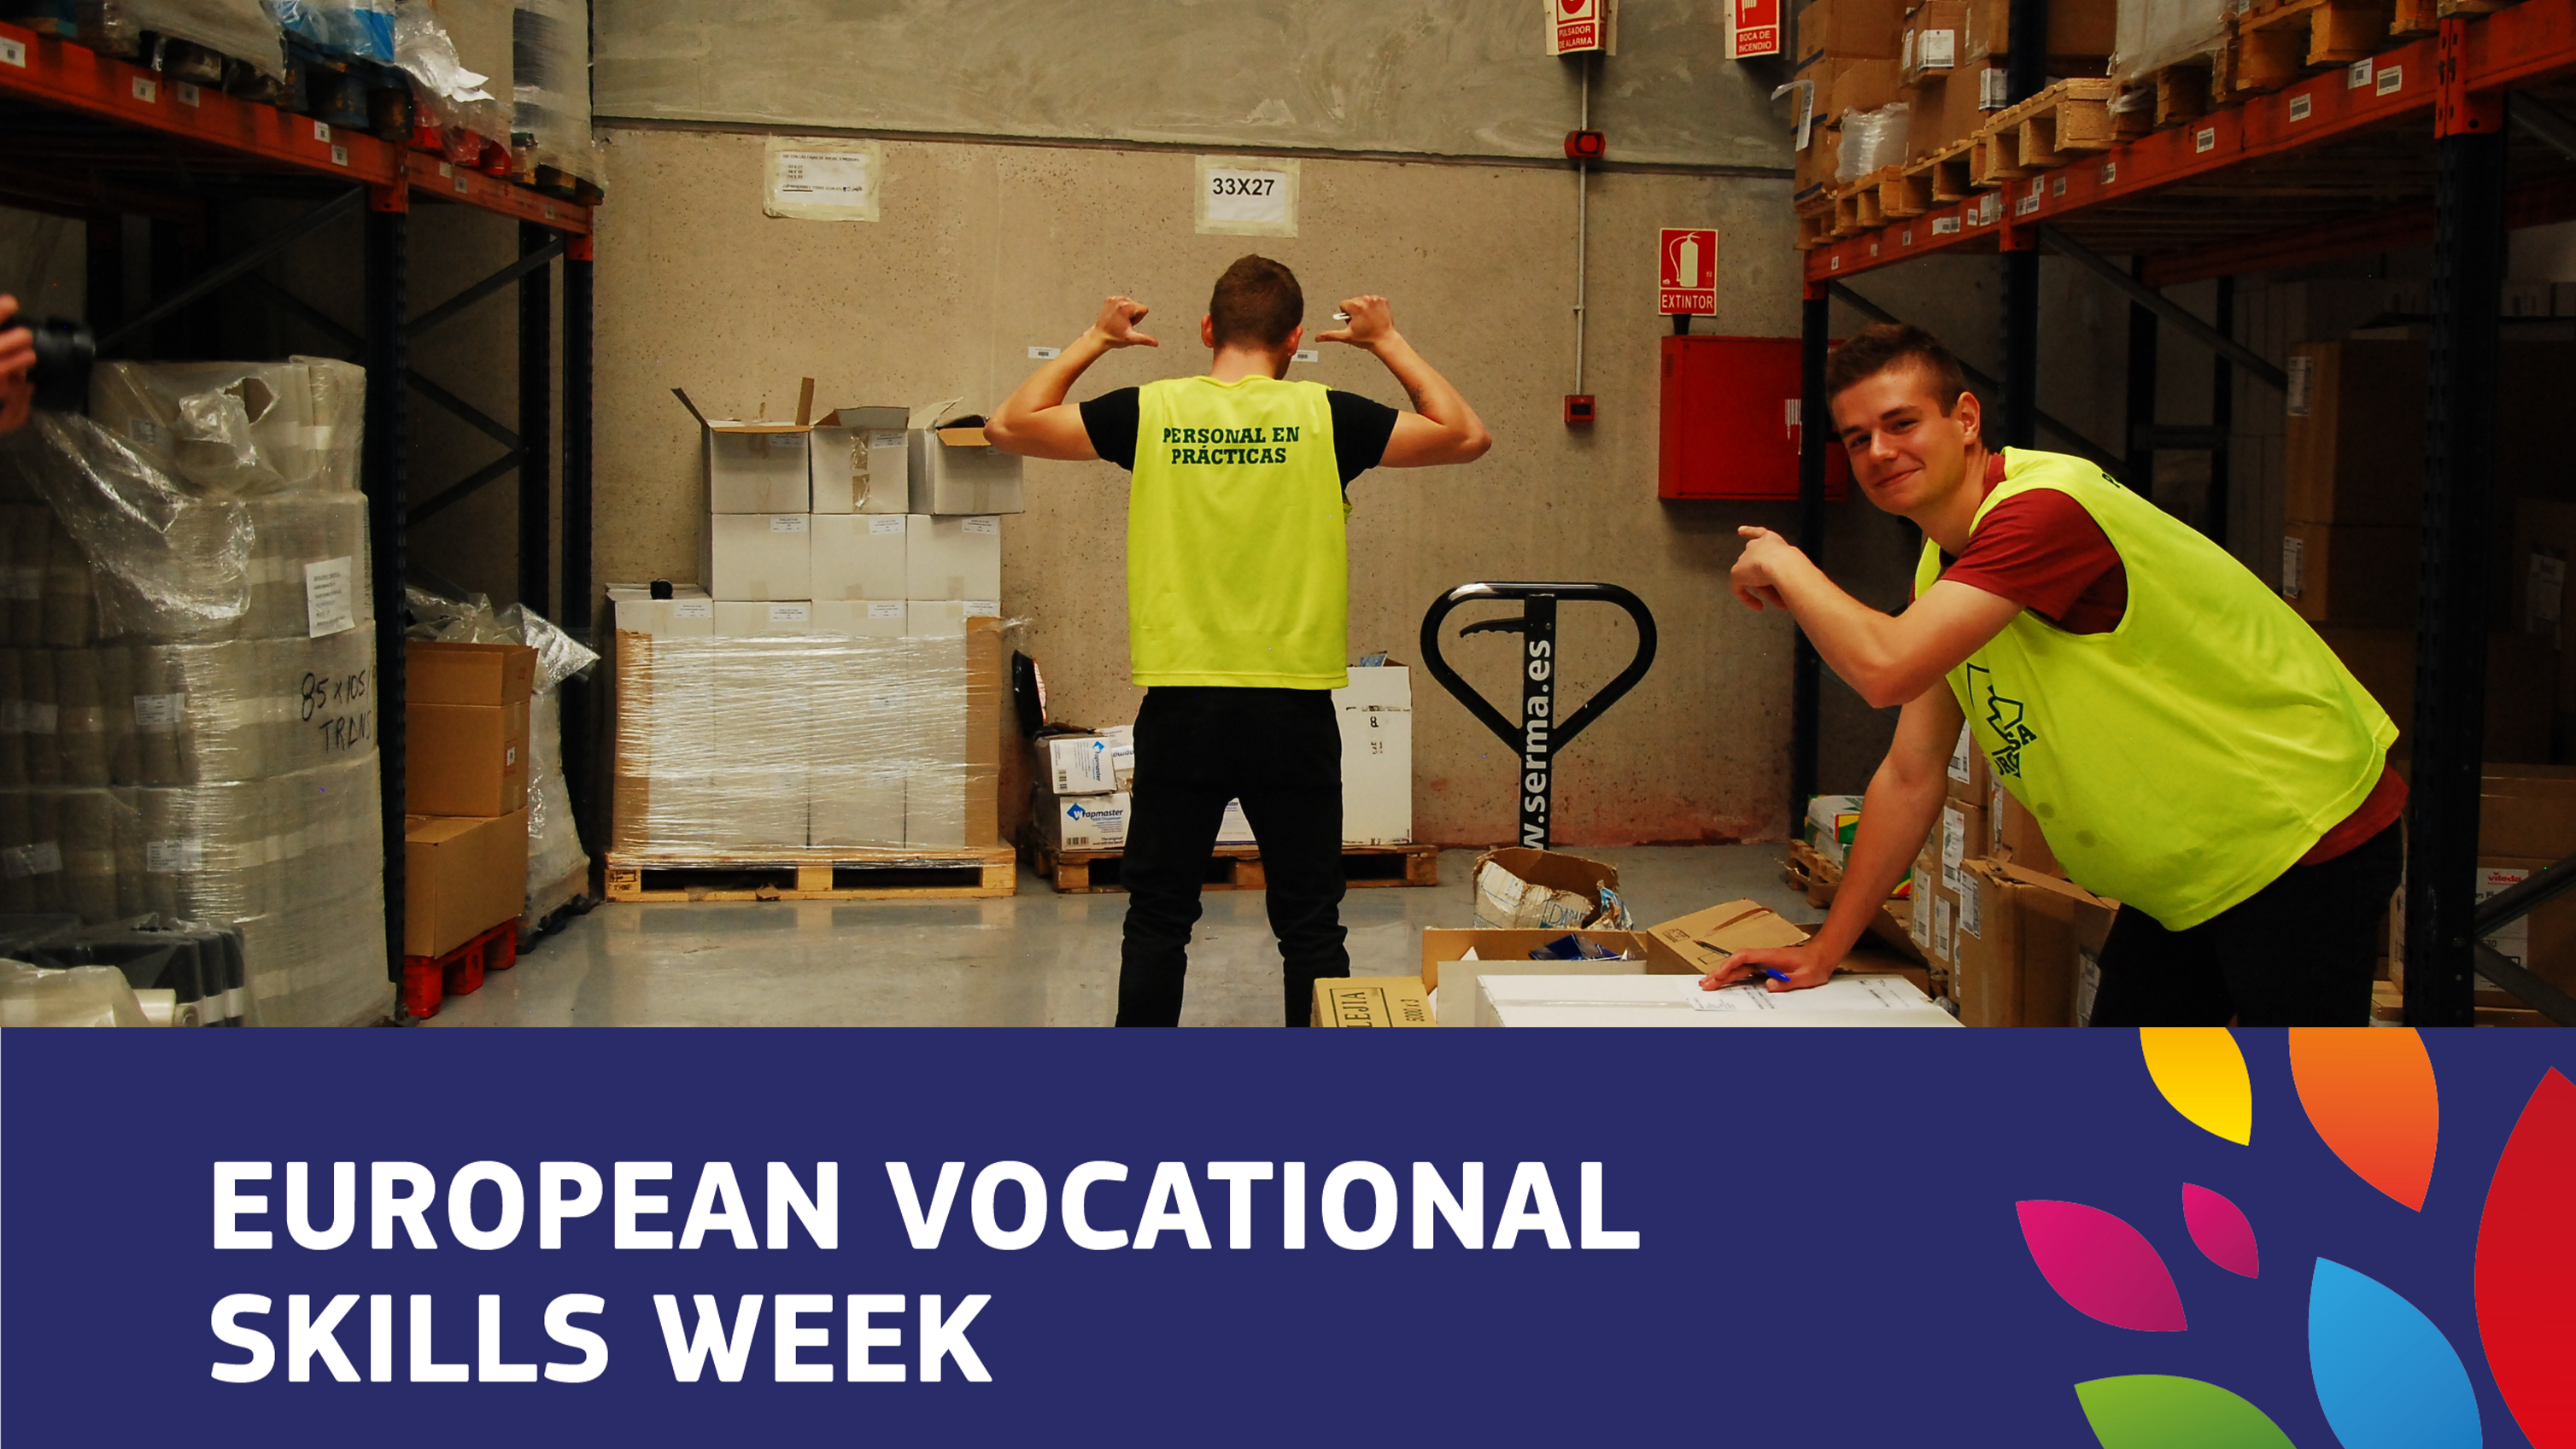 Let’s start the European Vocational Skills week 